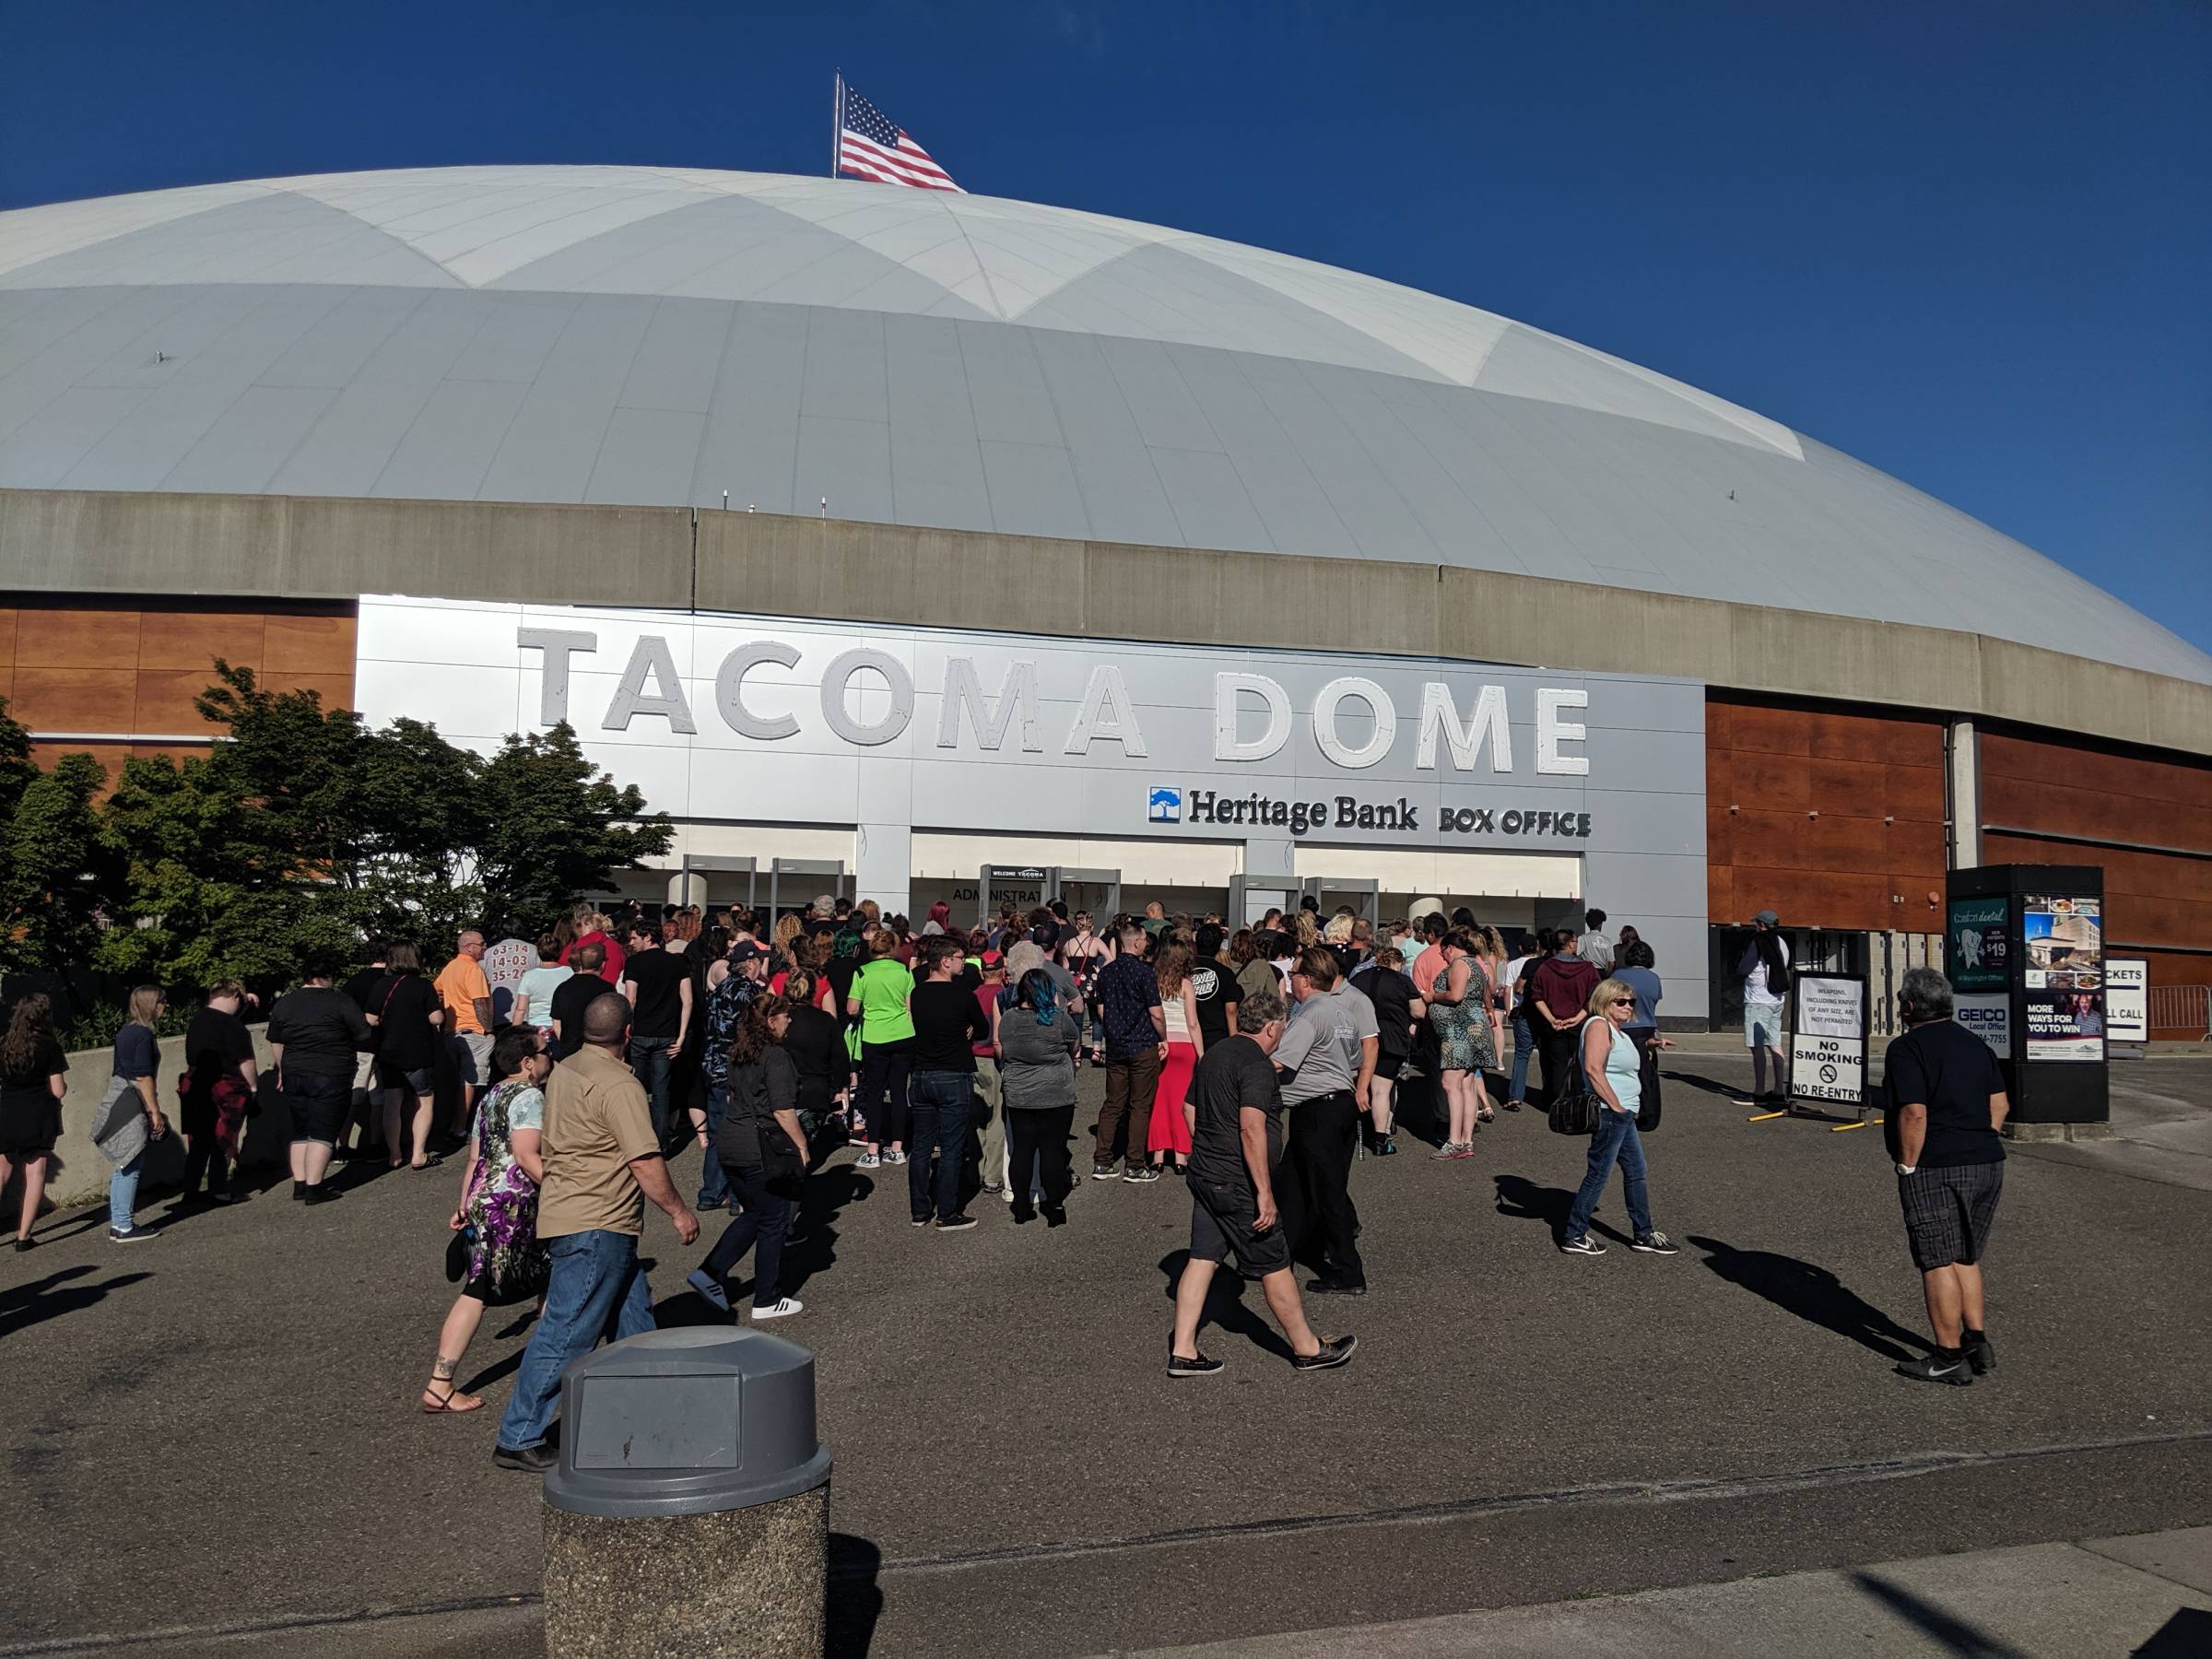 upcoming tacoma dome concerts